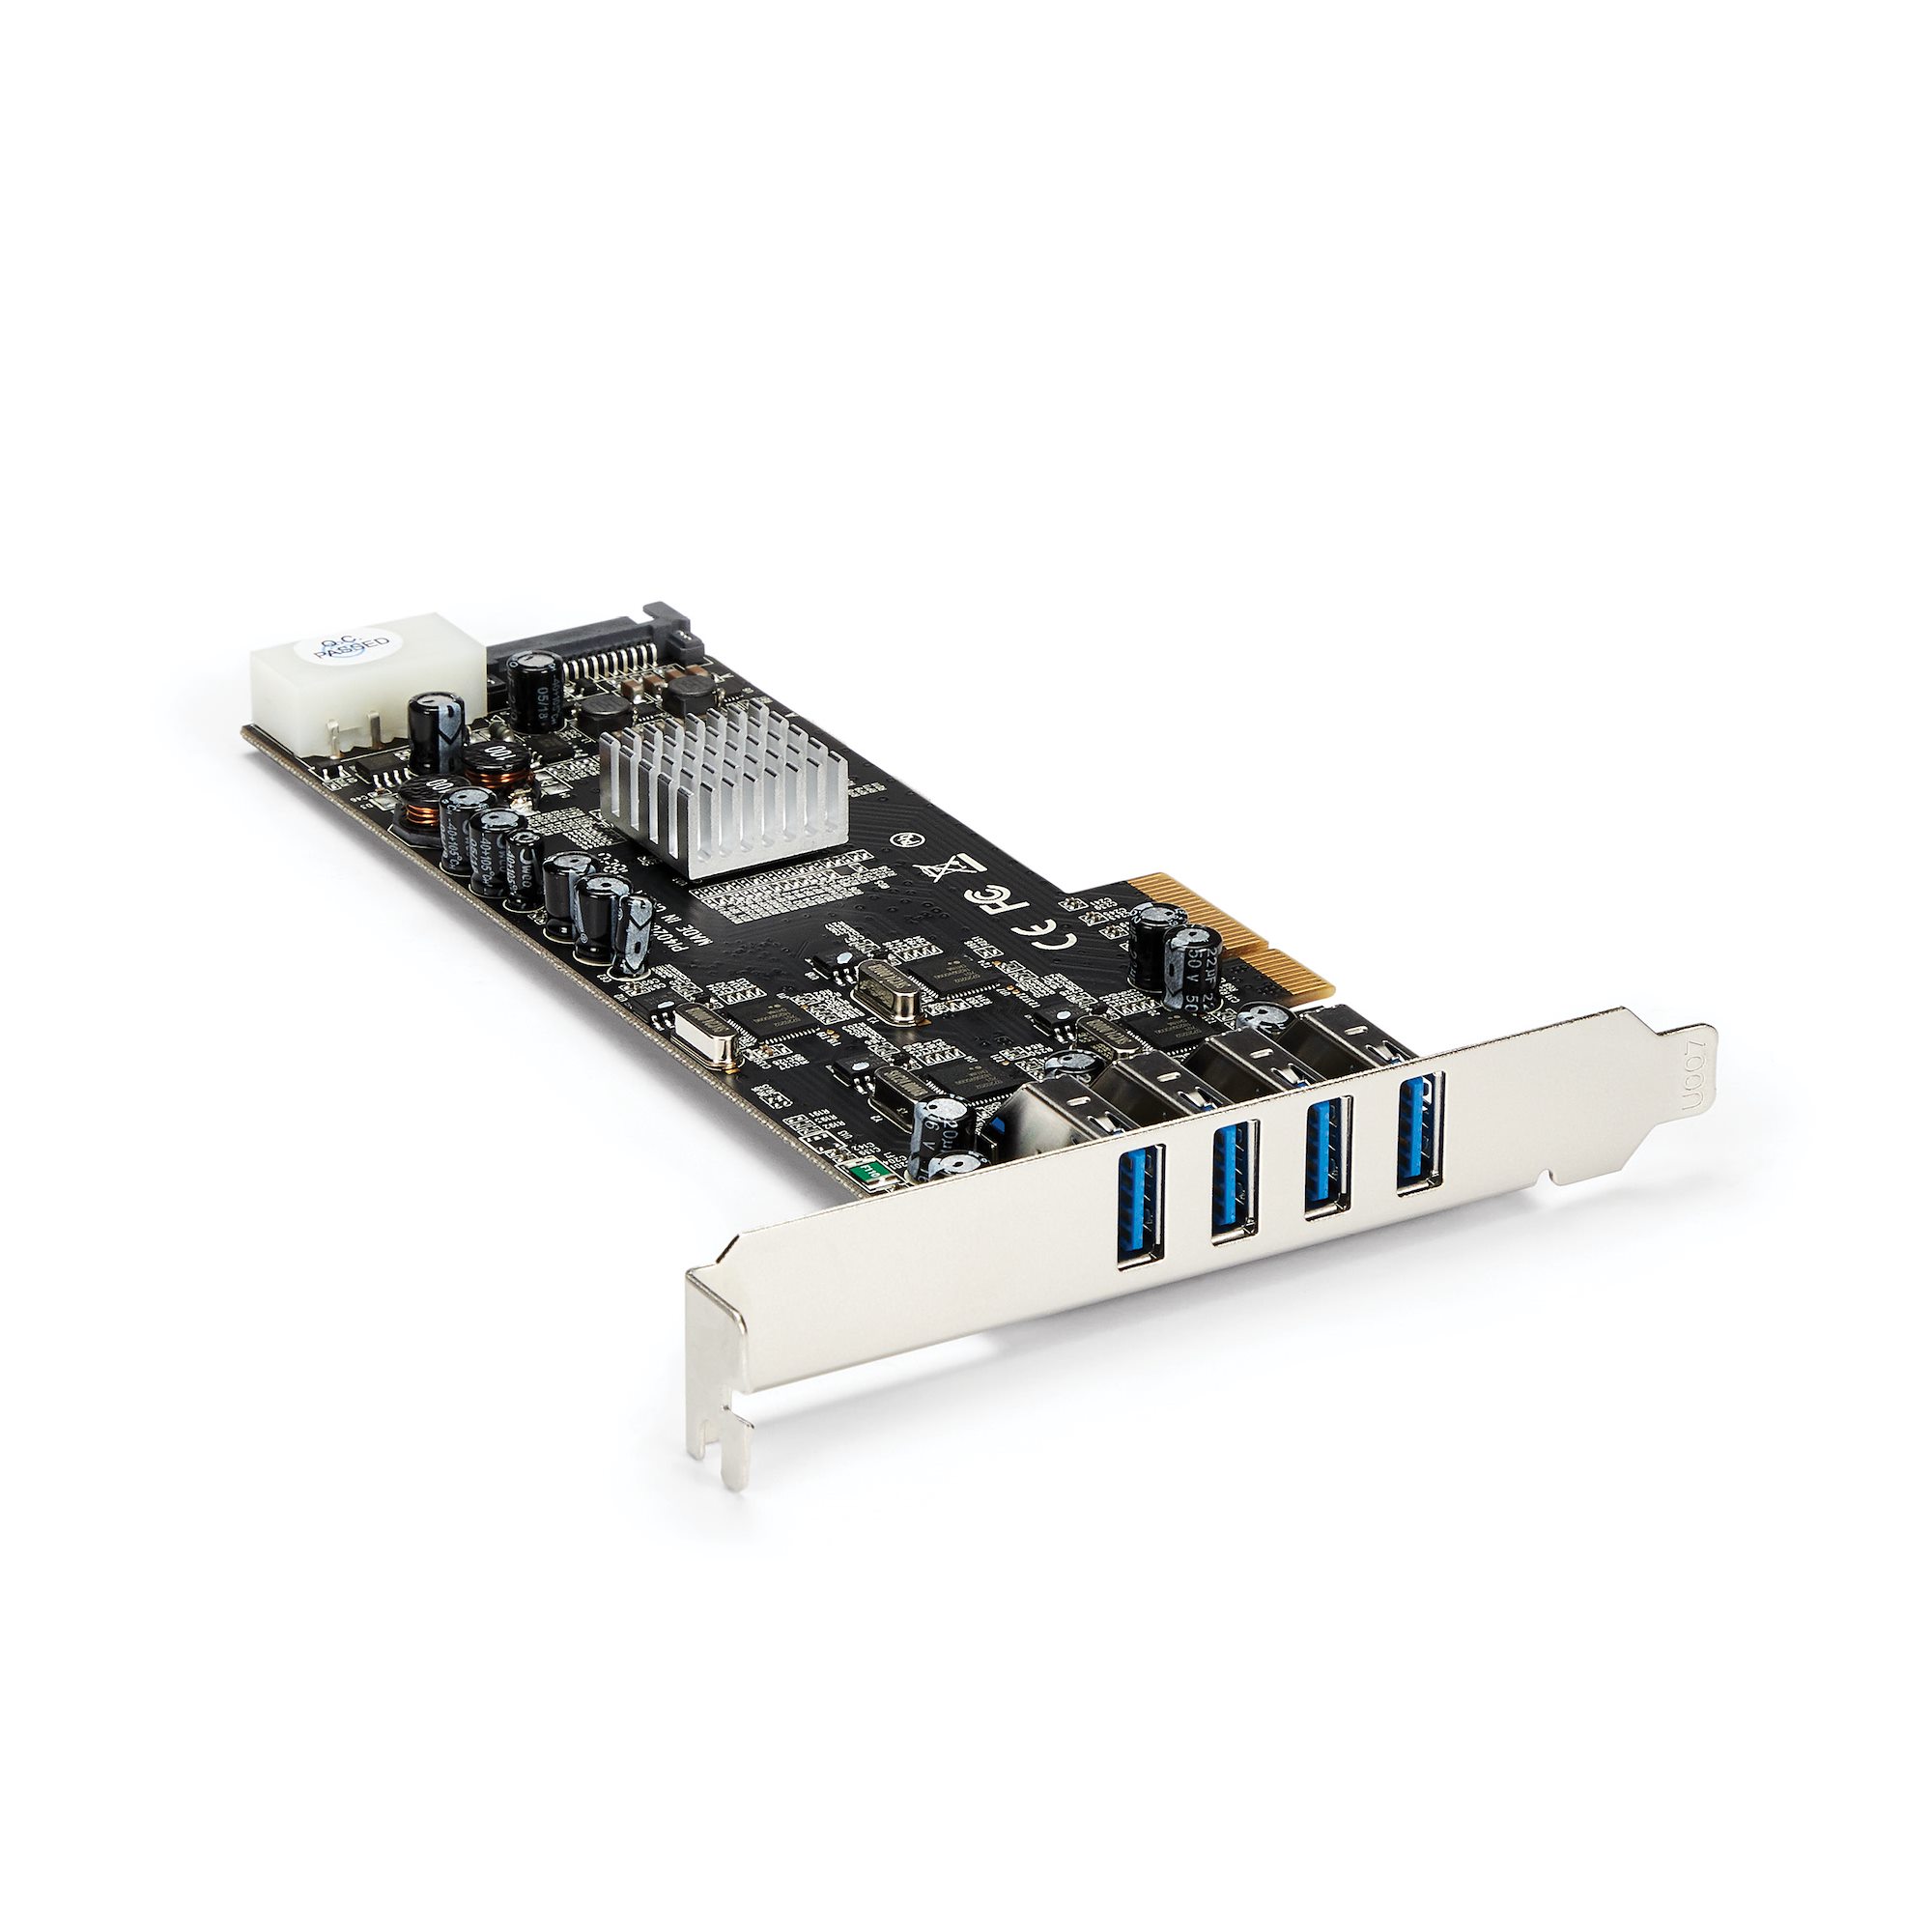 【PEXUSB3S44V】4 PT 4 CHANNEL PCIE USB 3 CARD